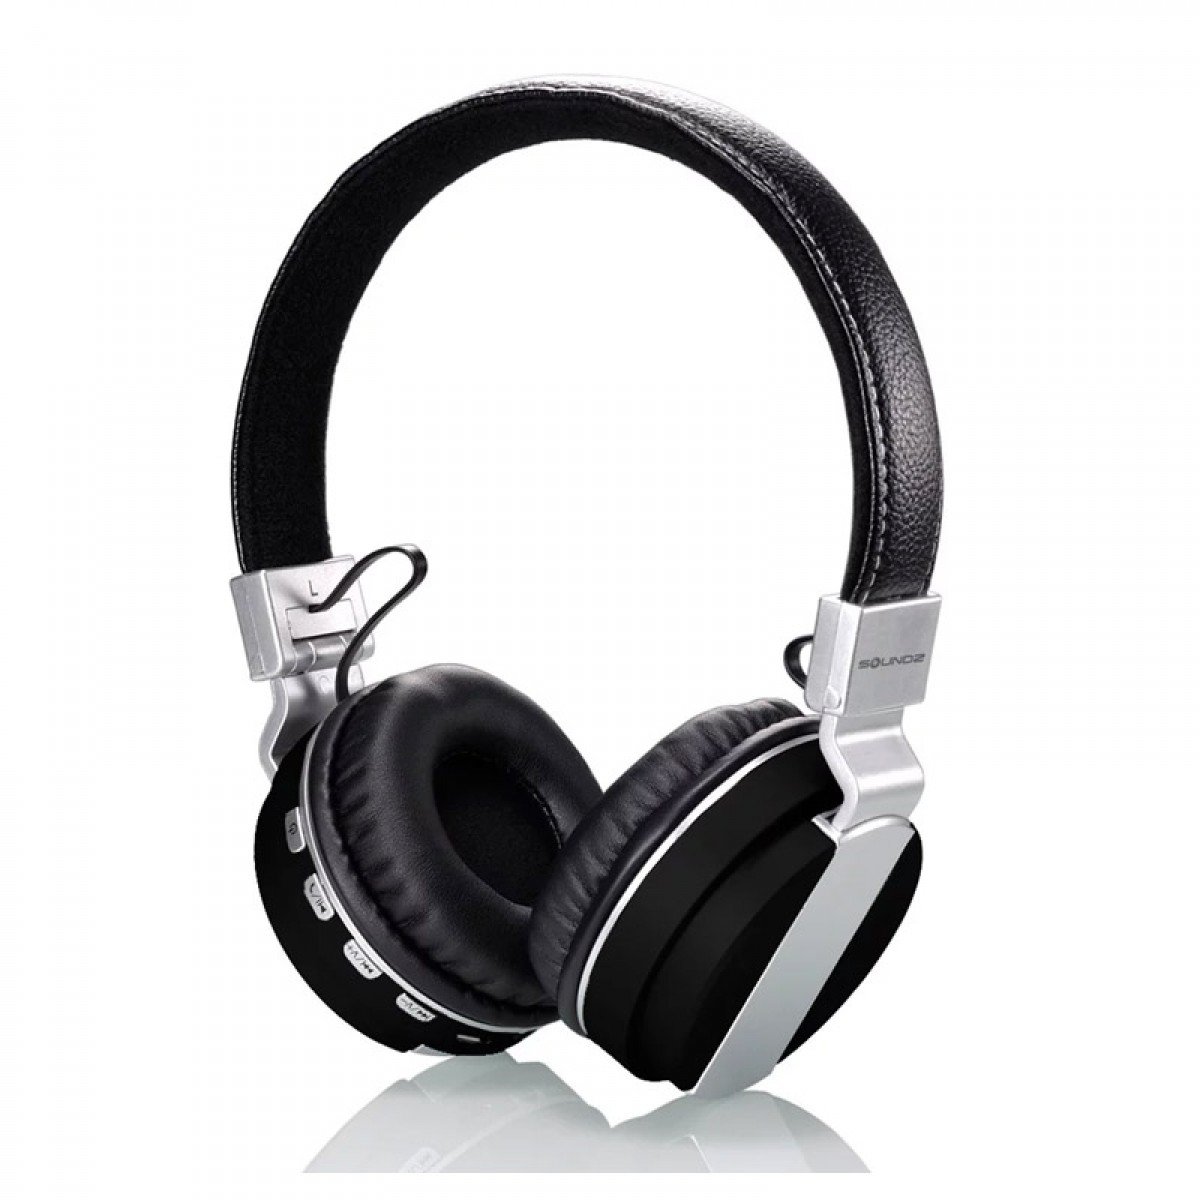 Soundz Wireless On-Ear Cushioned Headphones - Black